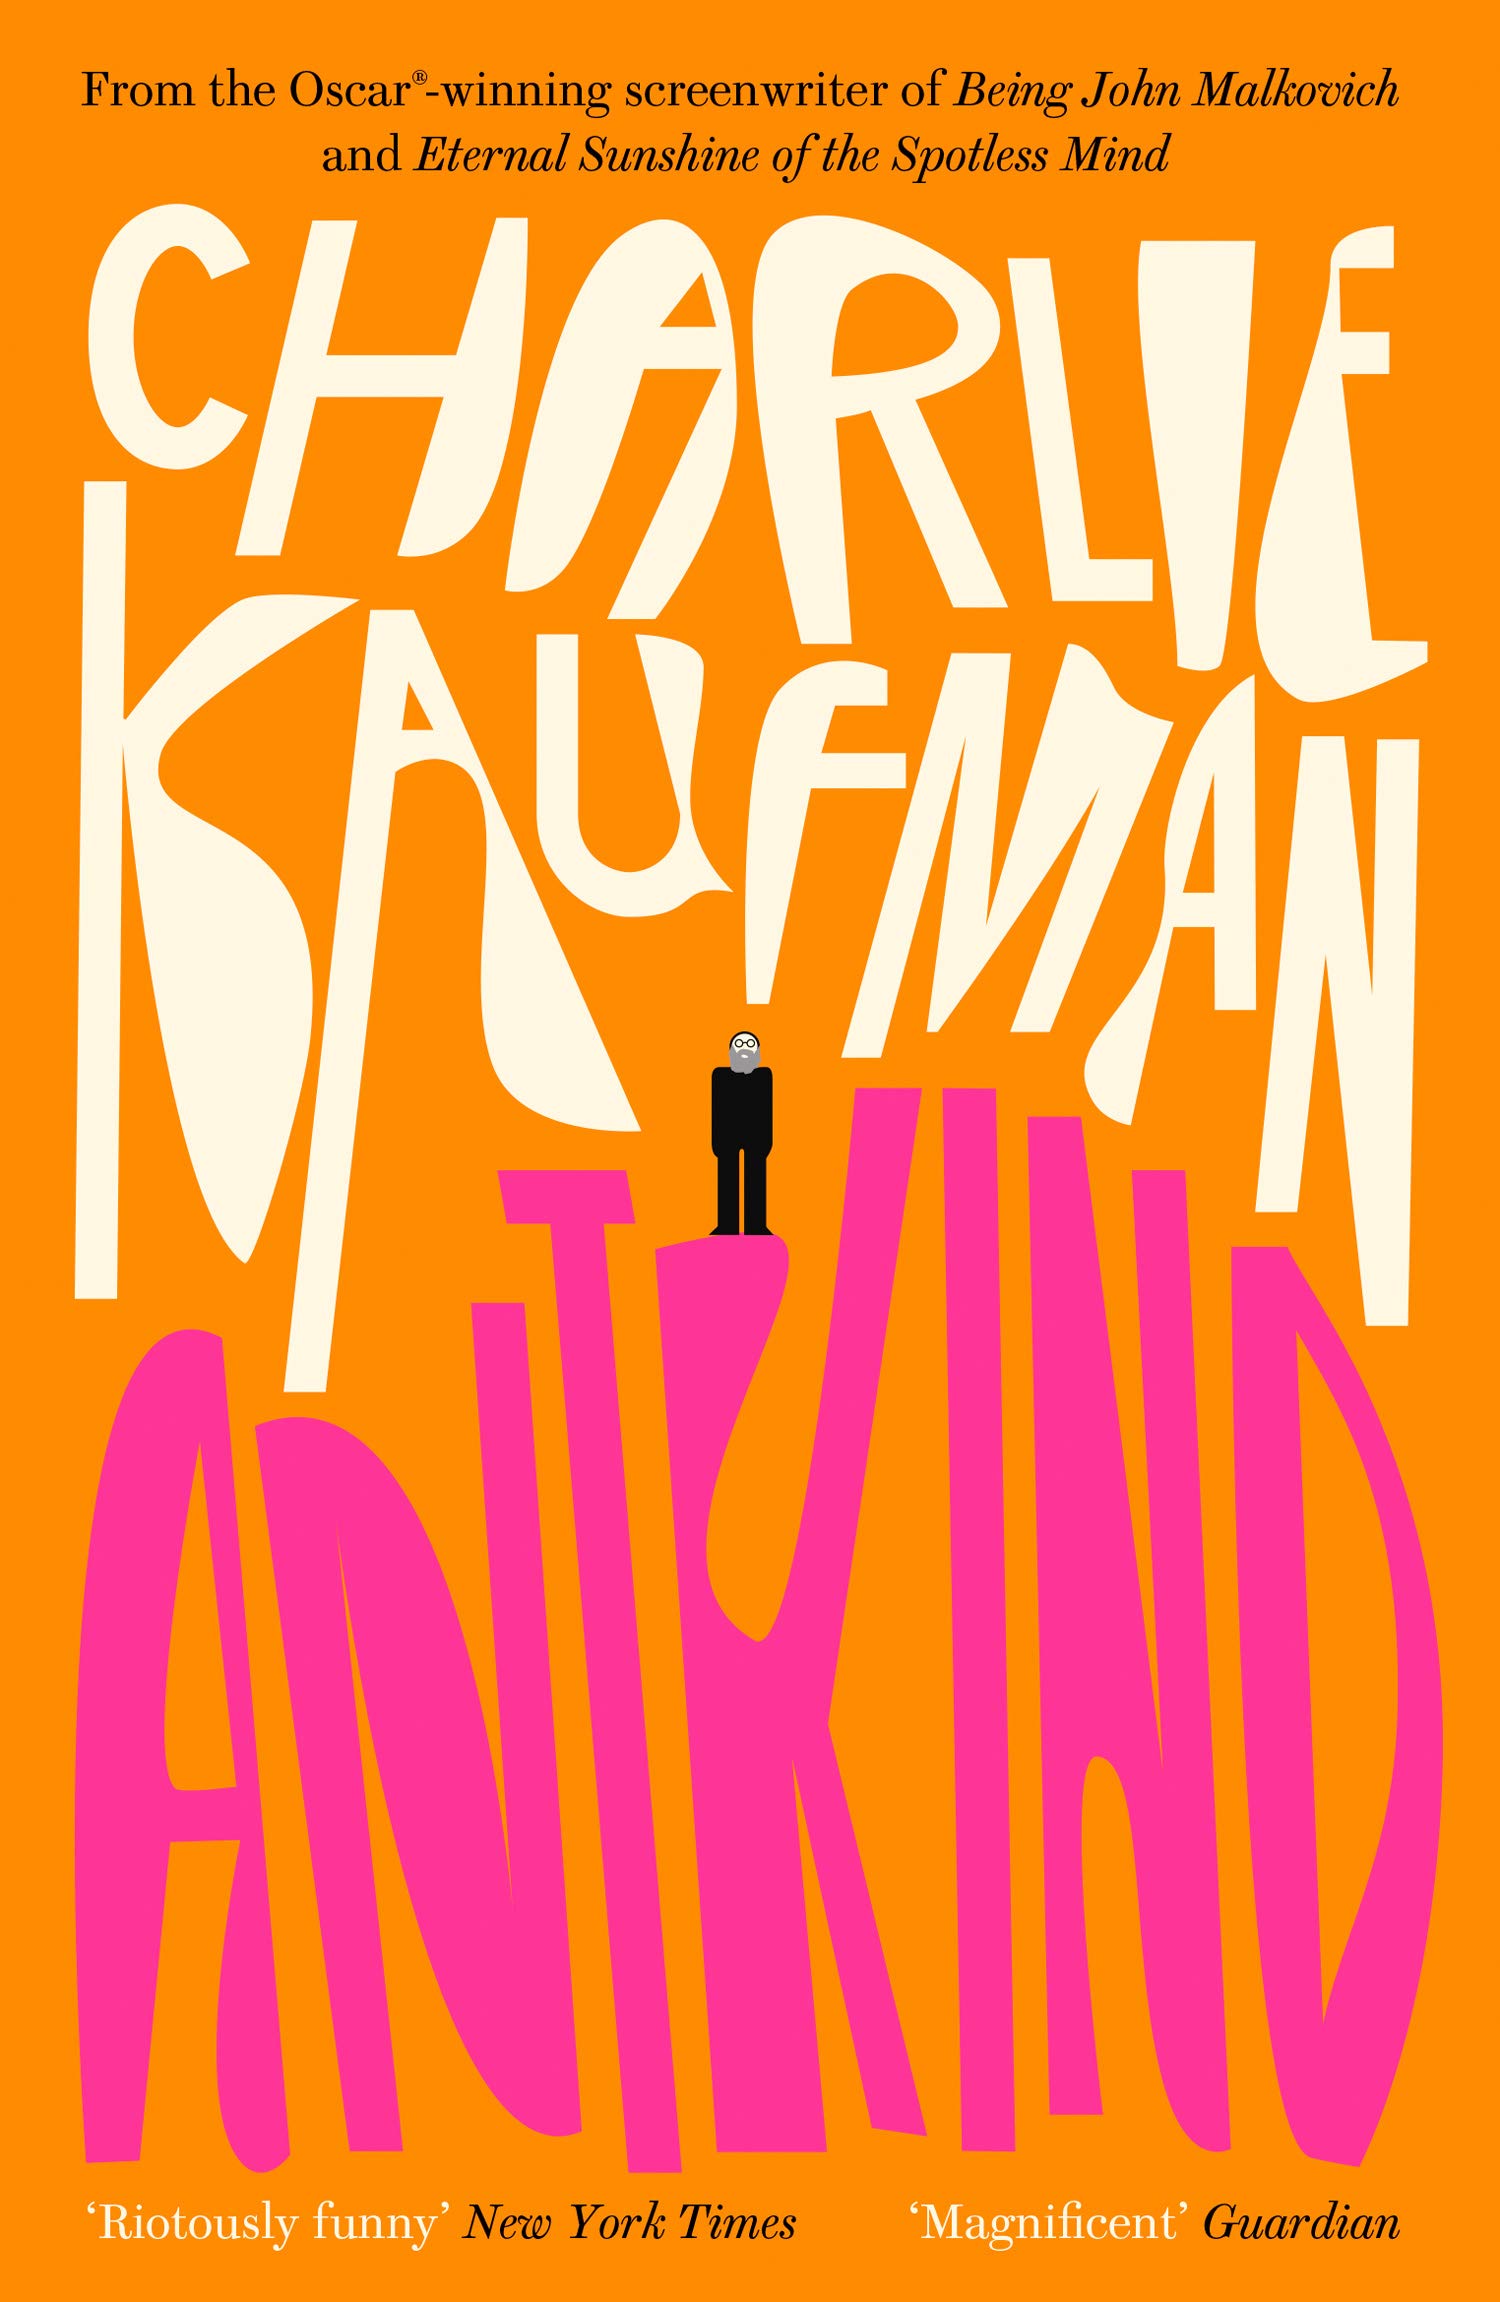 Antkind | Charlie Kaufman